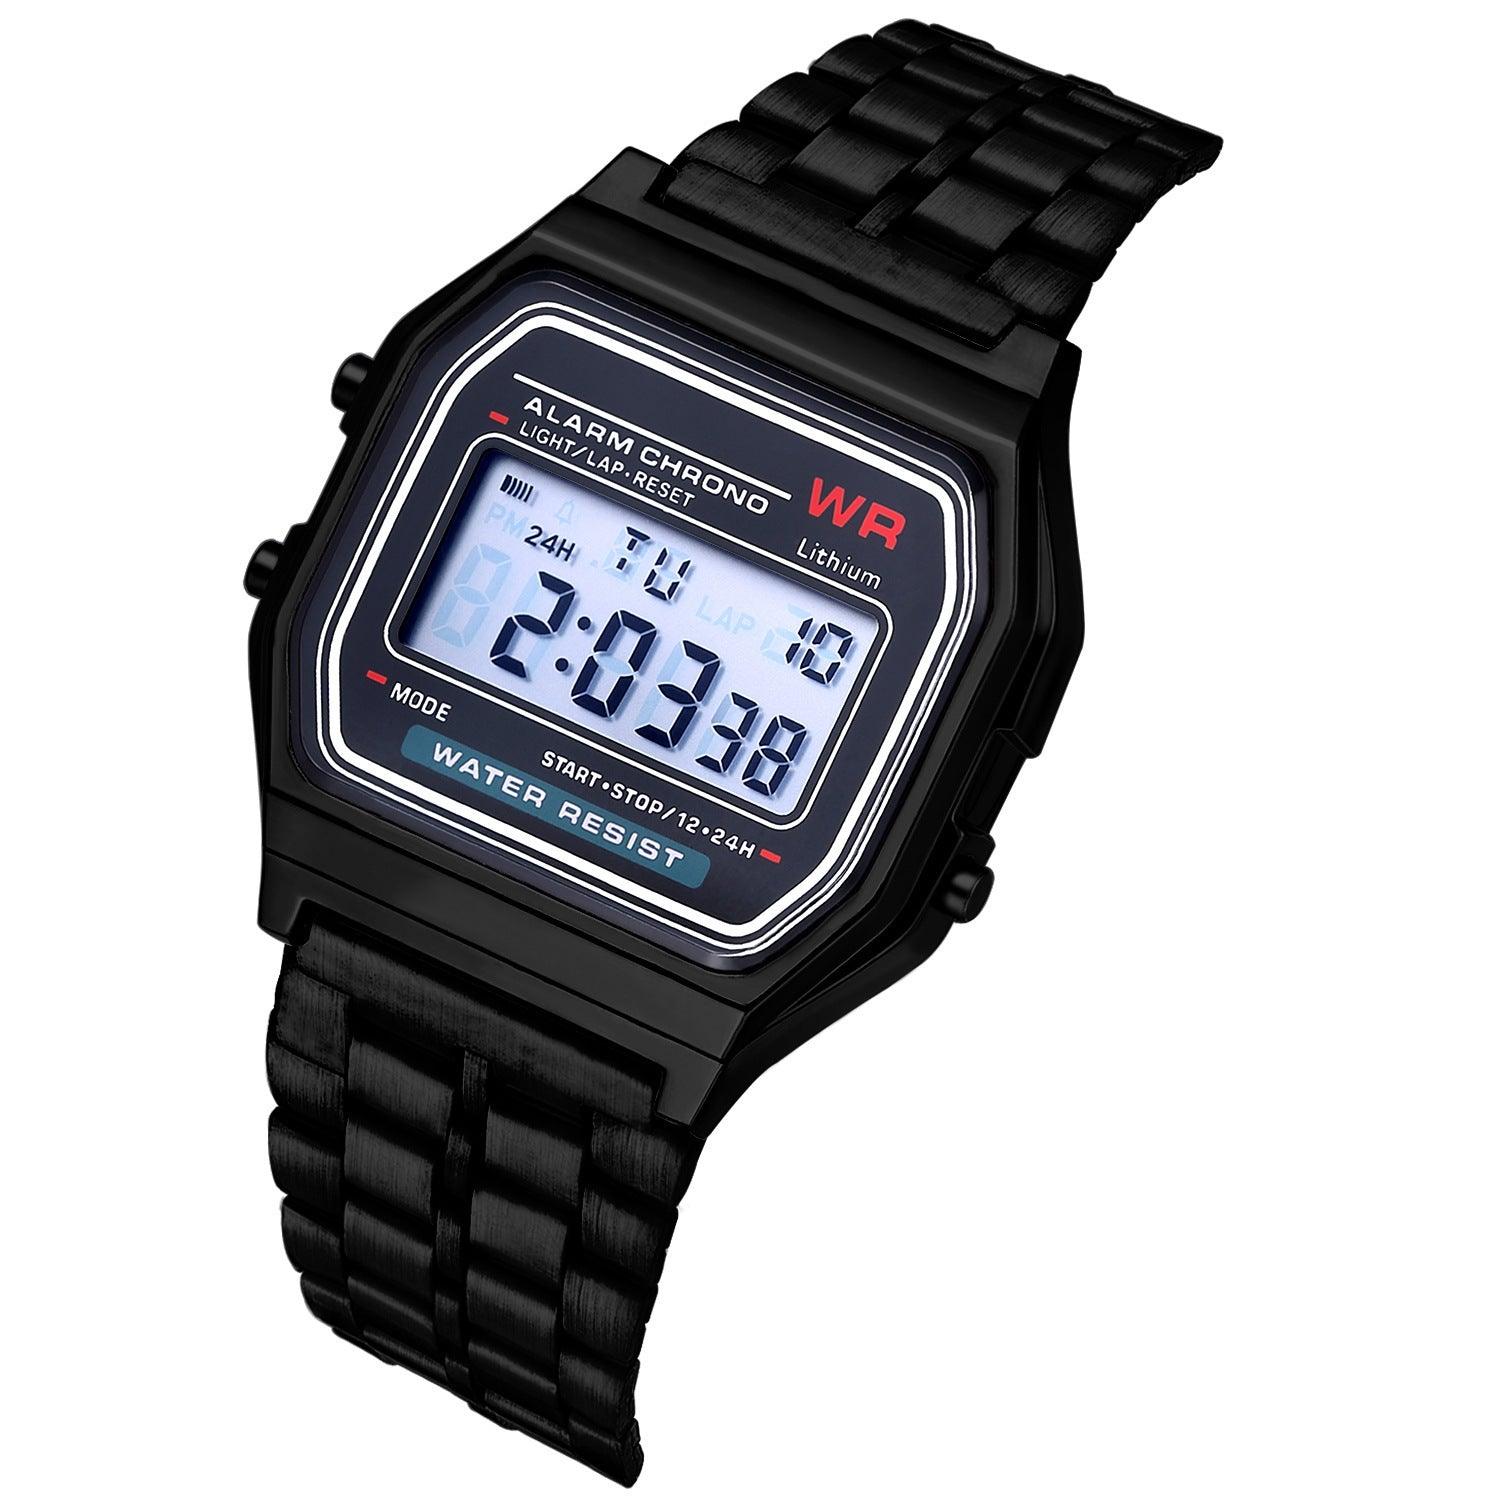 Retro - watch - Digital Watches - Stigma Watches - stigmawatches.com